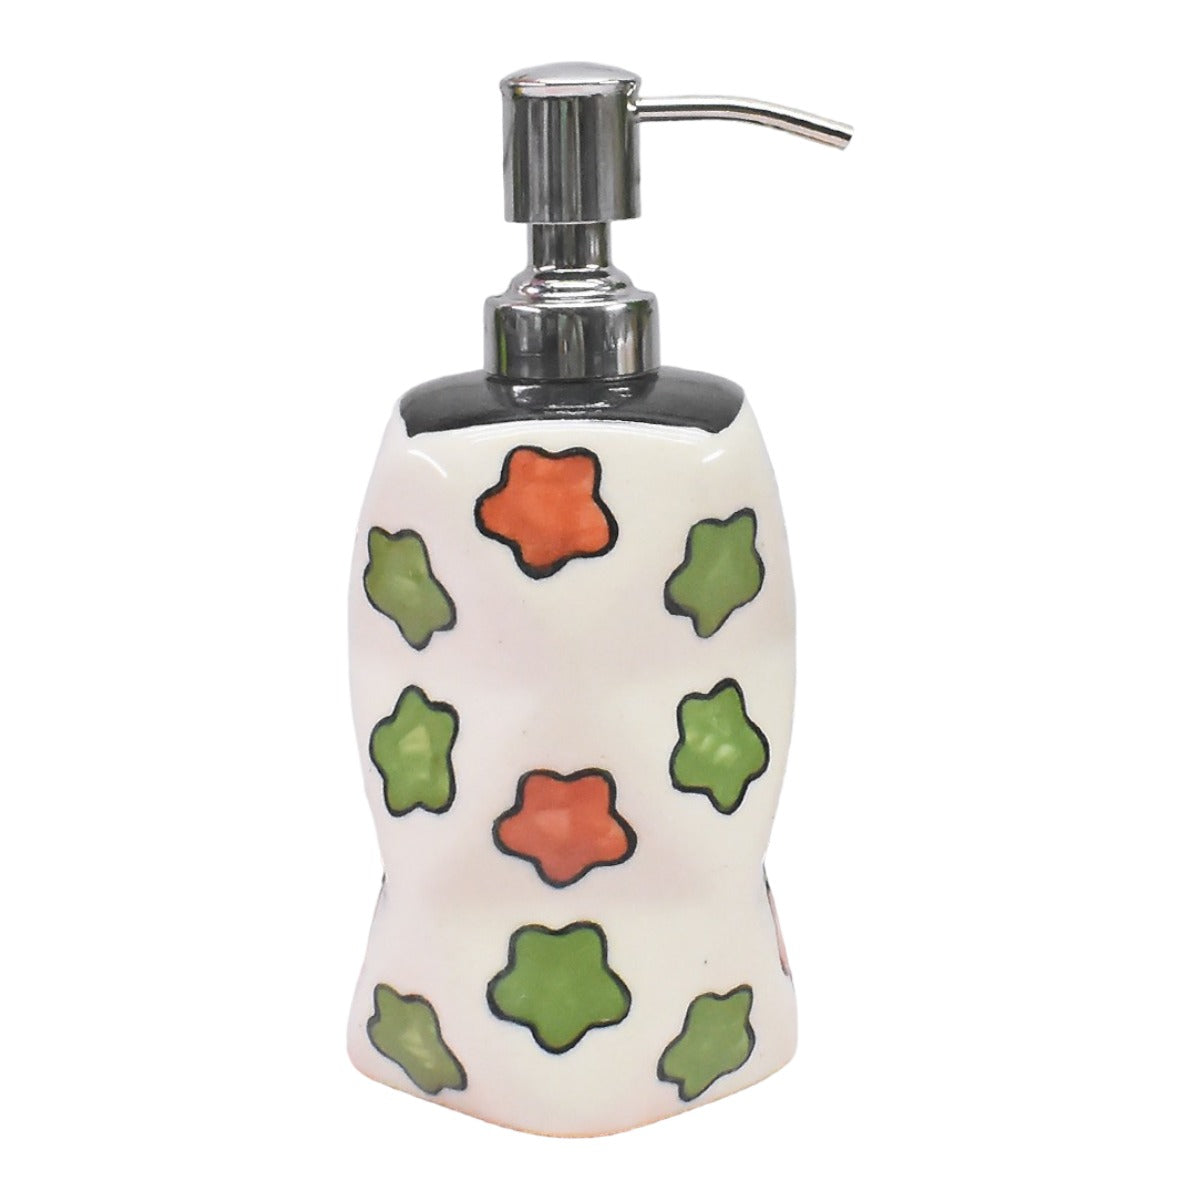 Ceramic Soap Dispenser handwash Pump for Bathroom, Set of 1, Black (9497)